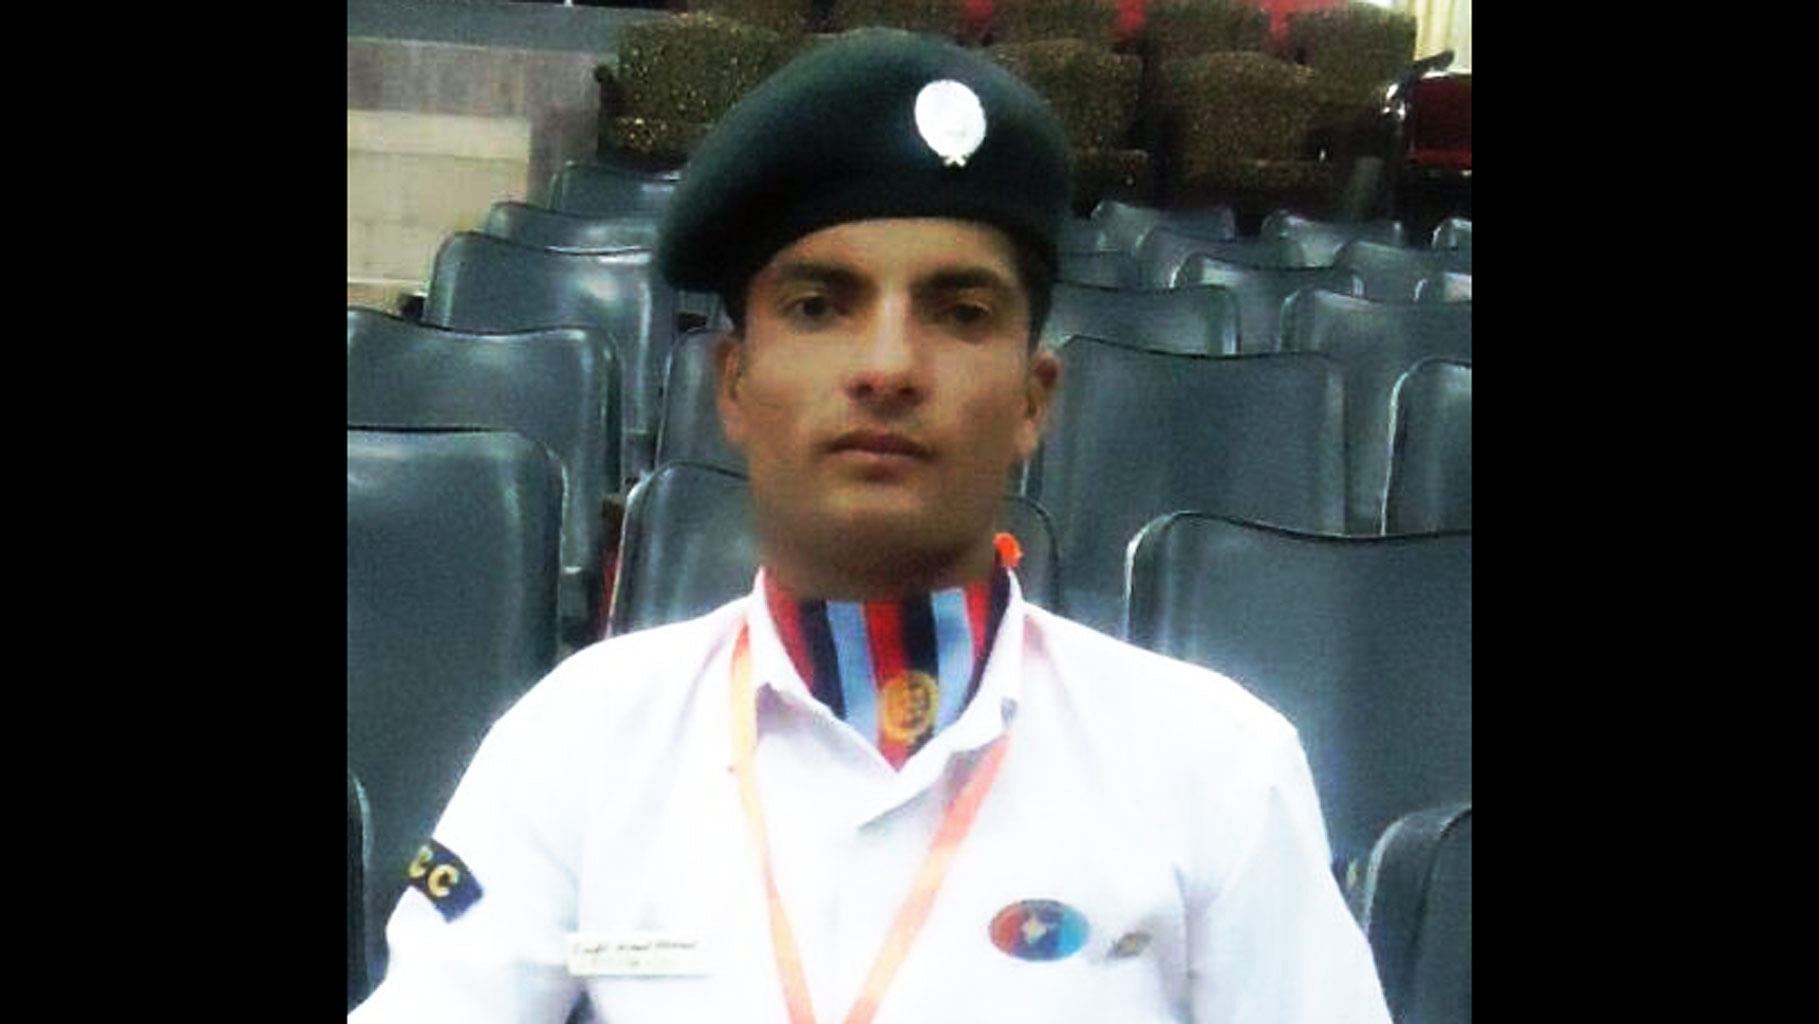 NCC Cadet from Jammu and Kashmir, Javeed Ahmad Parrey will join the Indian Army as an officer. (Photo: Twitter/<a href="https://twitter.com/deepshikhaET">@deepshikhaET</a>)